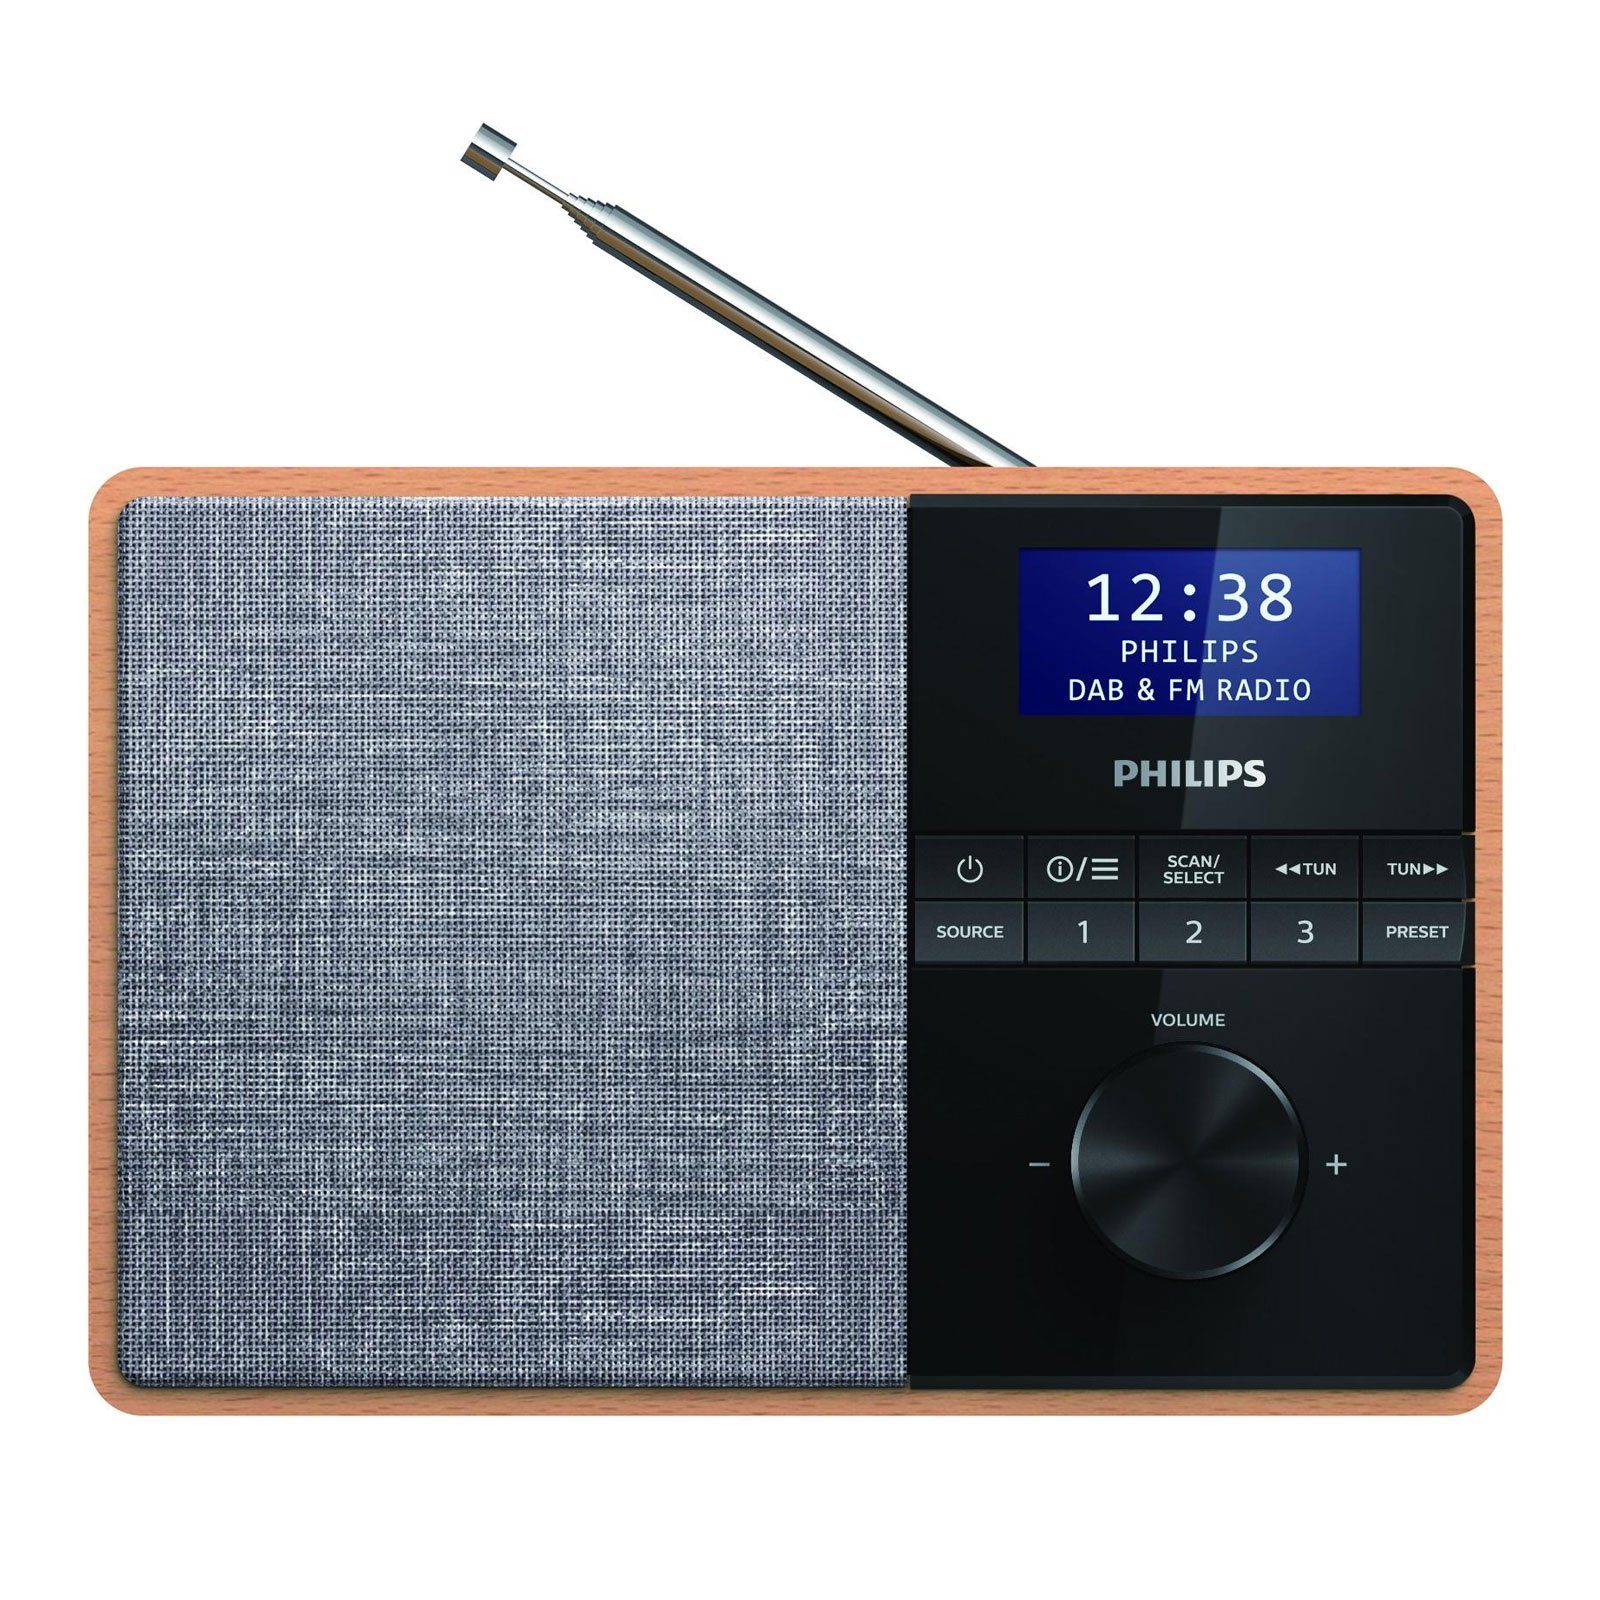 W) Digitalradio (5 Philips R5505 (DAB) Küchen-Radio